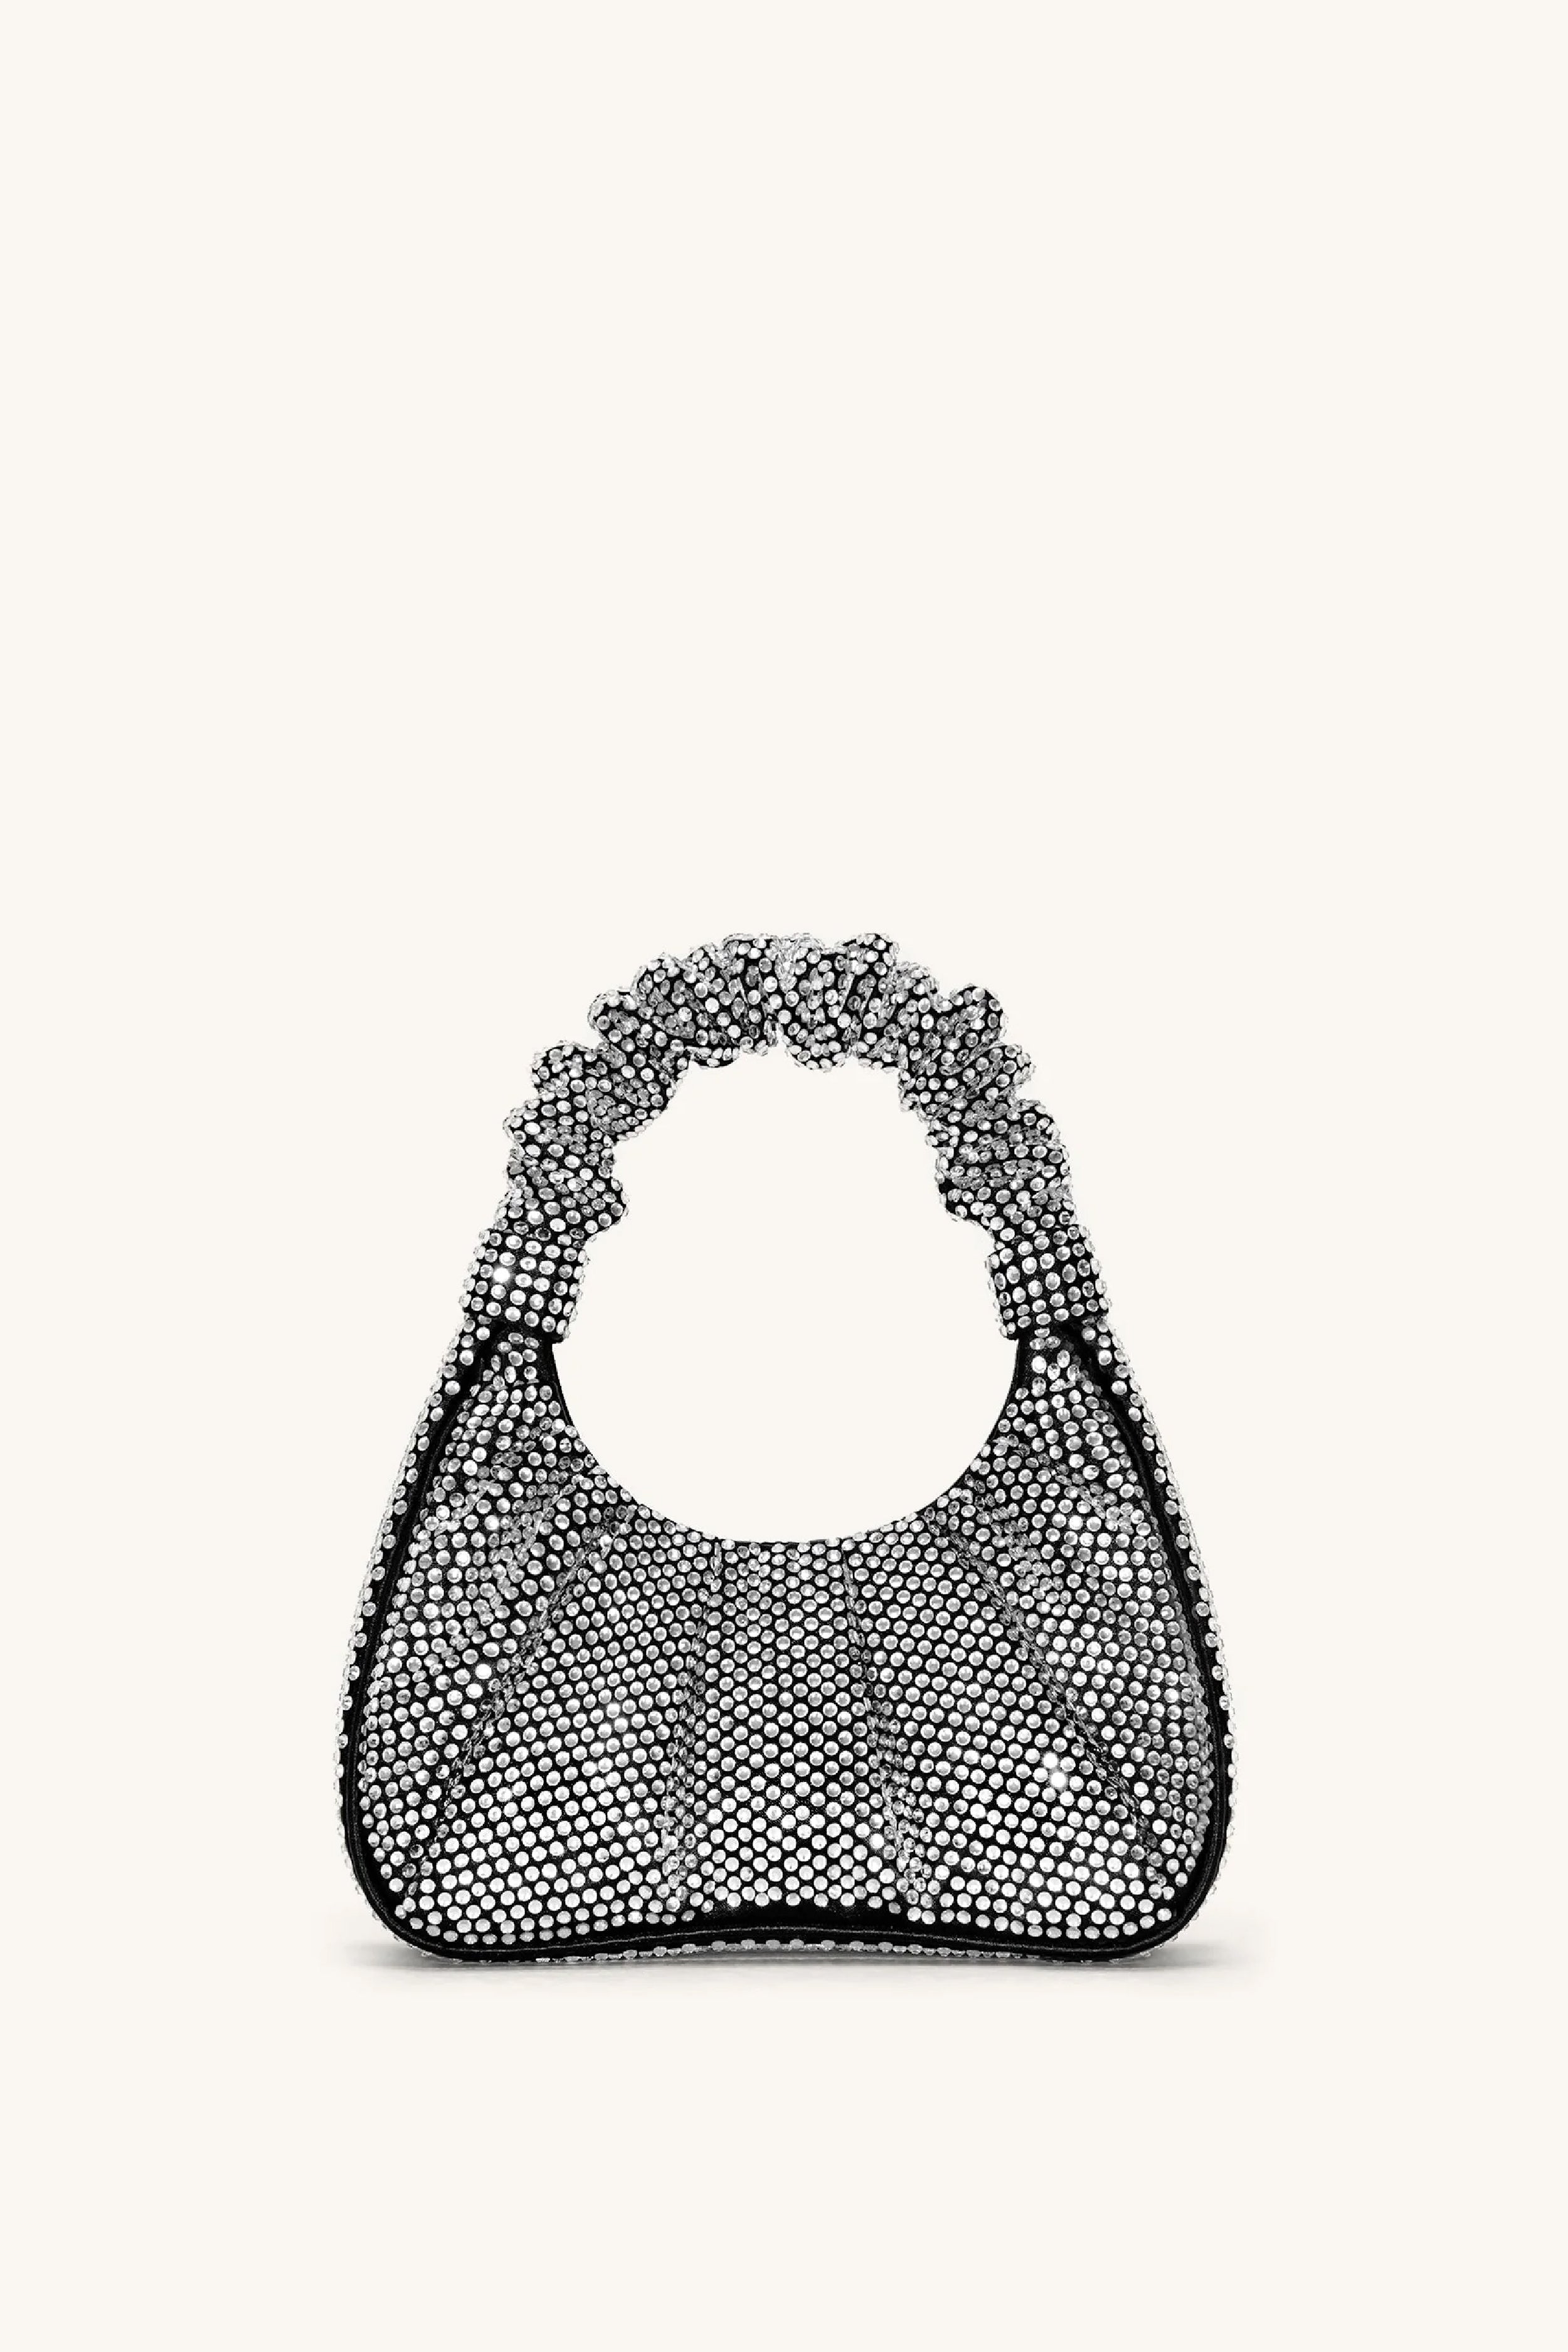 JW Pei Eva Metallic Sequin Mini Shoulder Bag